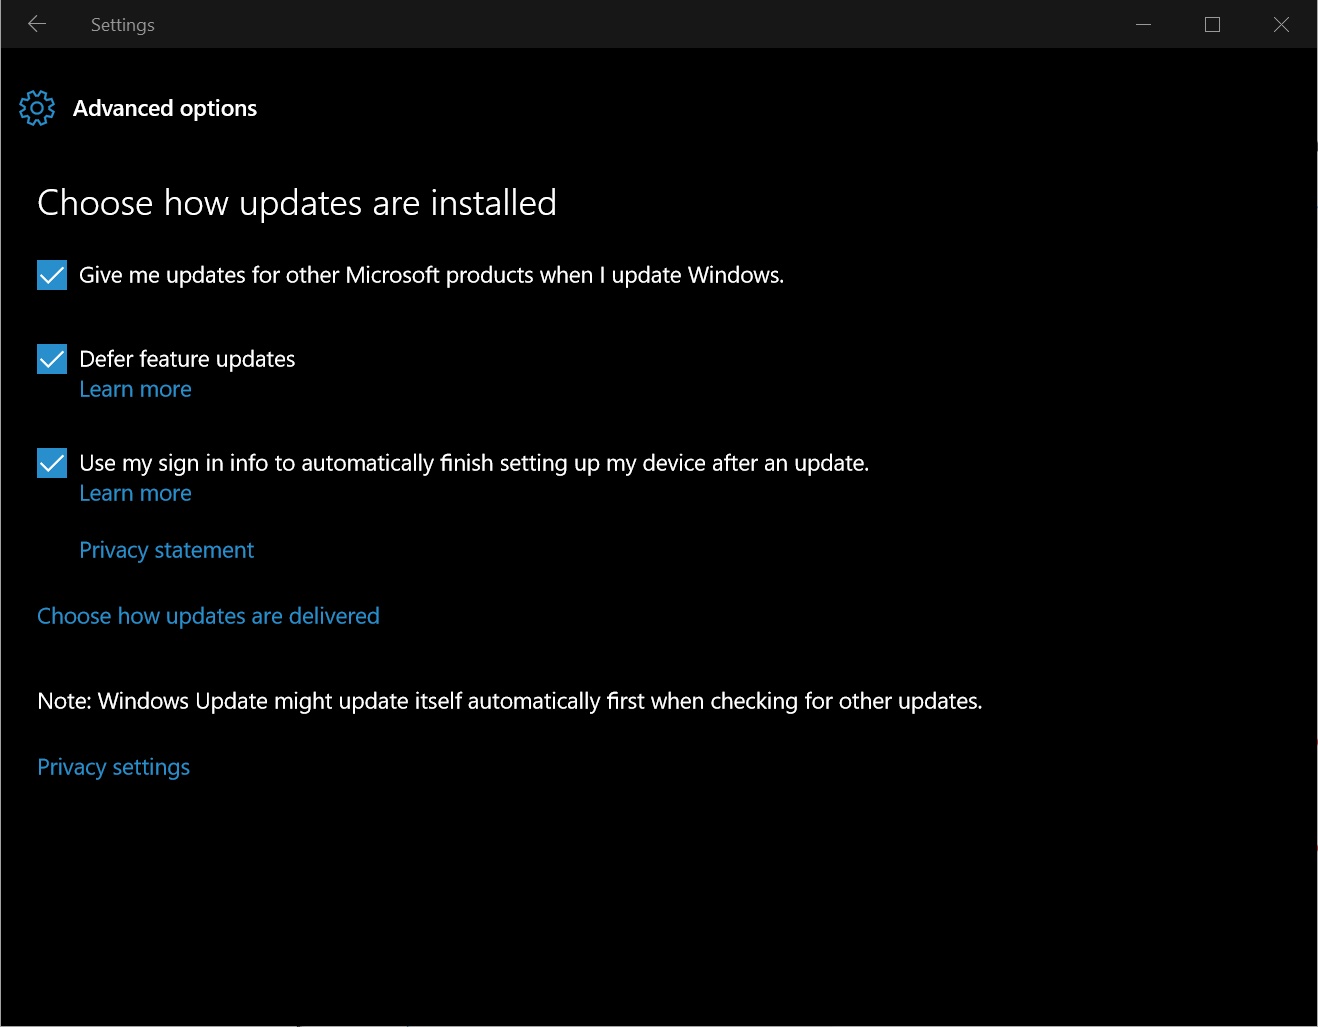 Windows 10 update advanced options